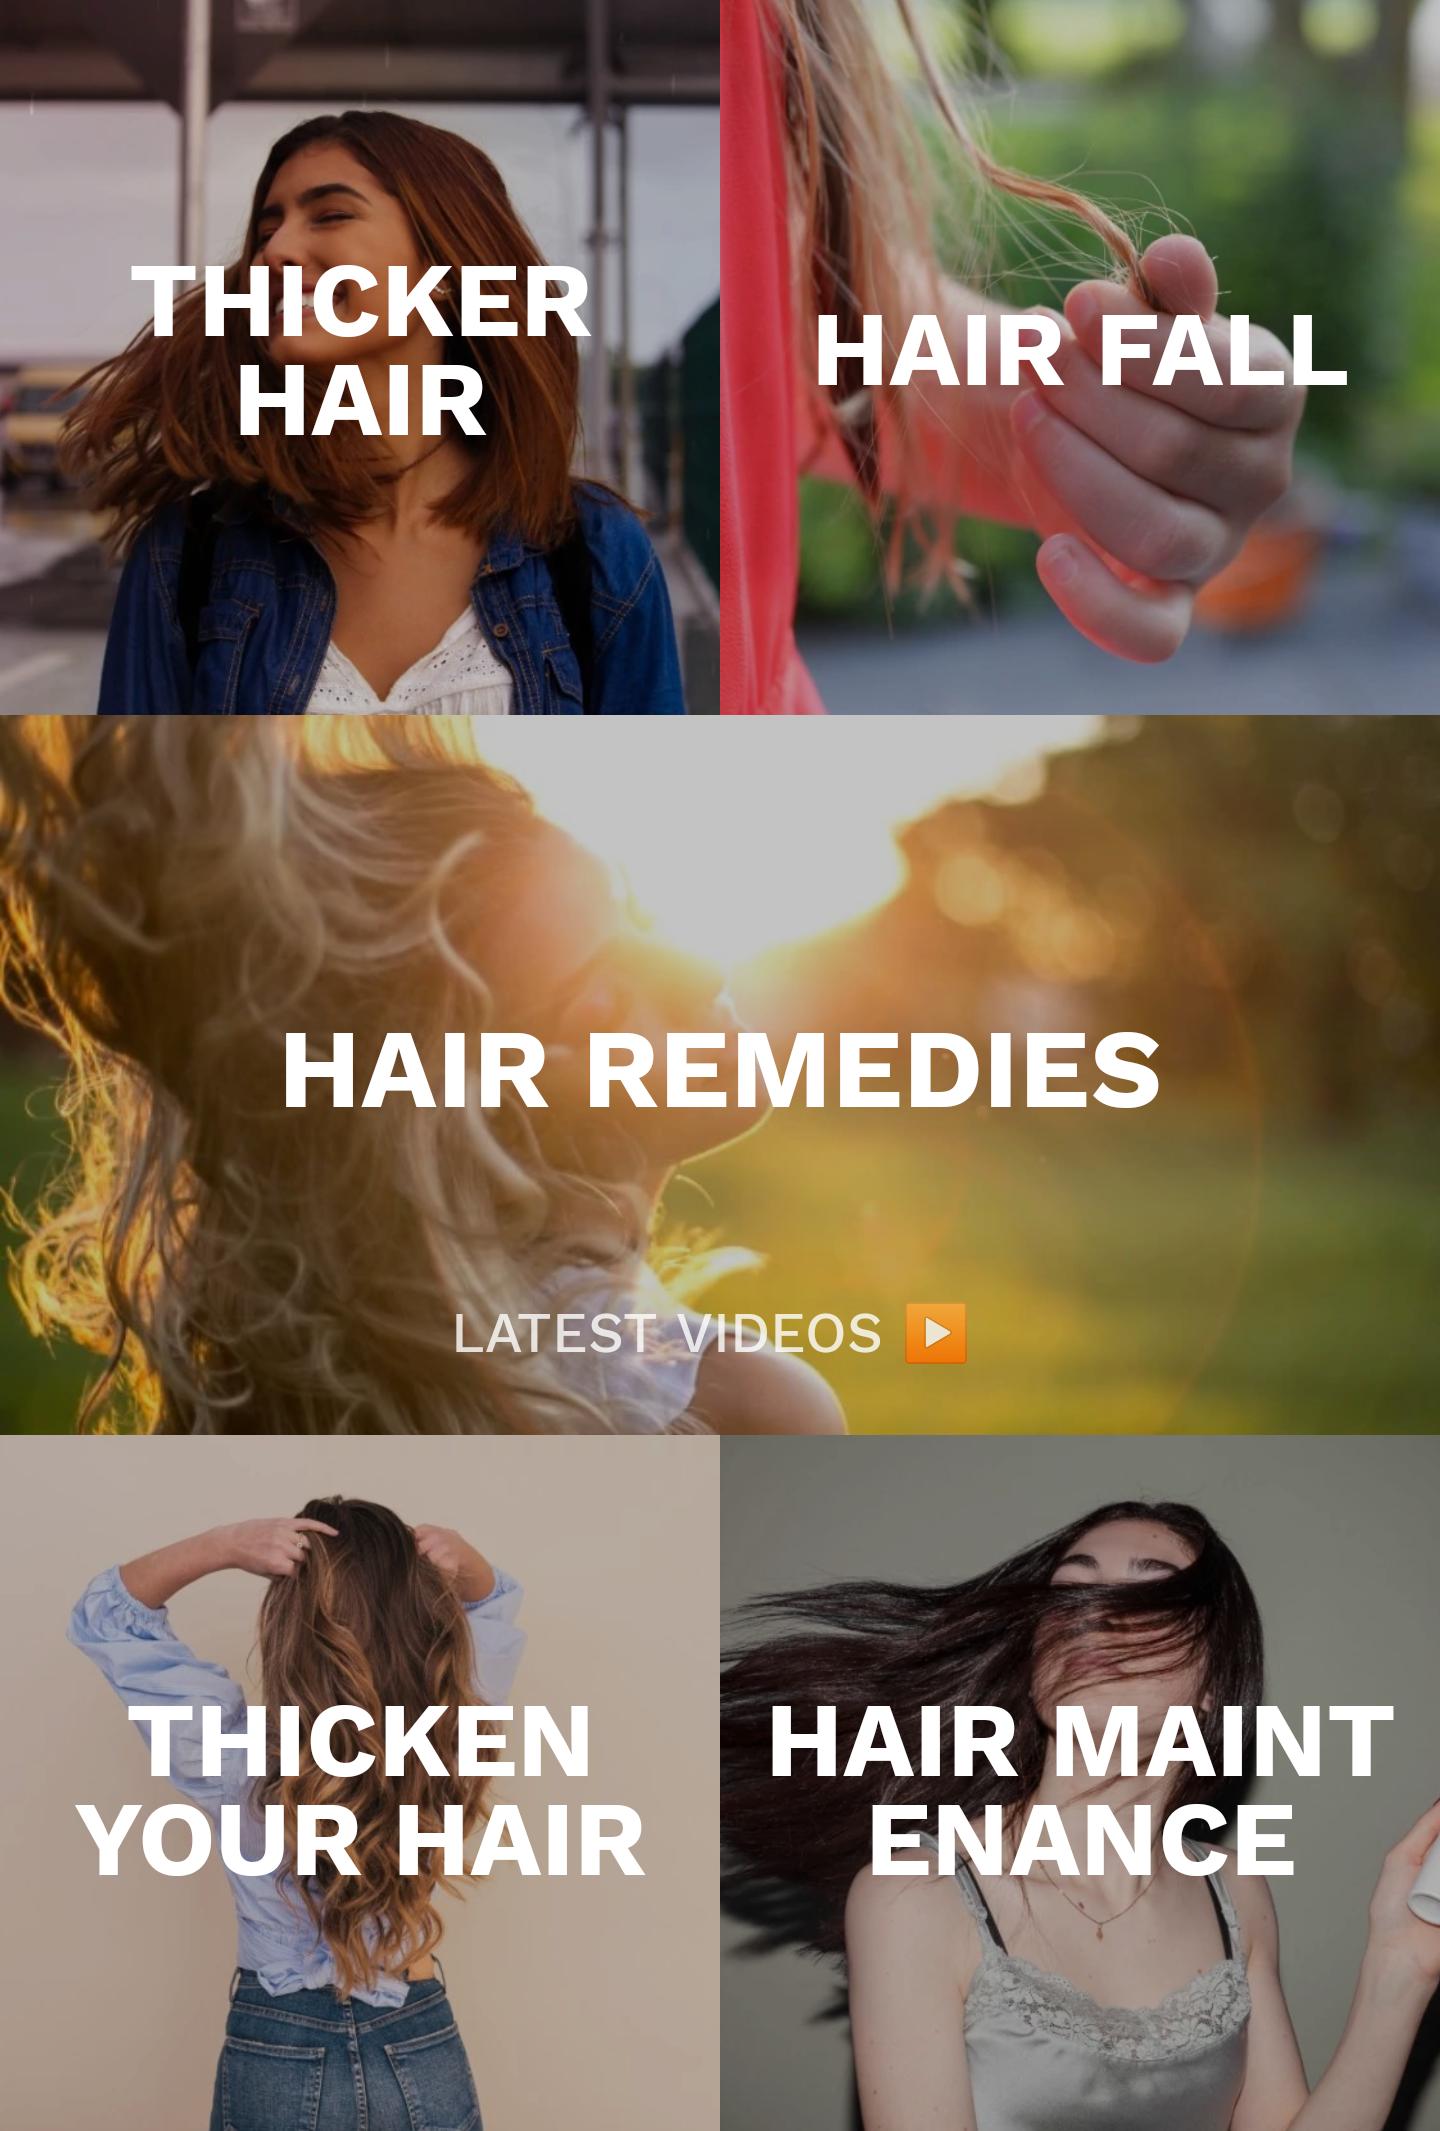 Haircare app for women 3.0.168 Screenshot 3